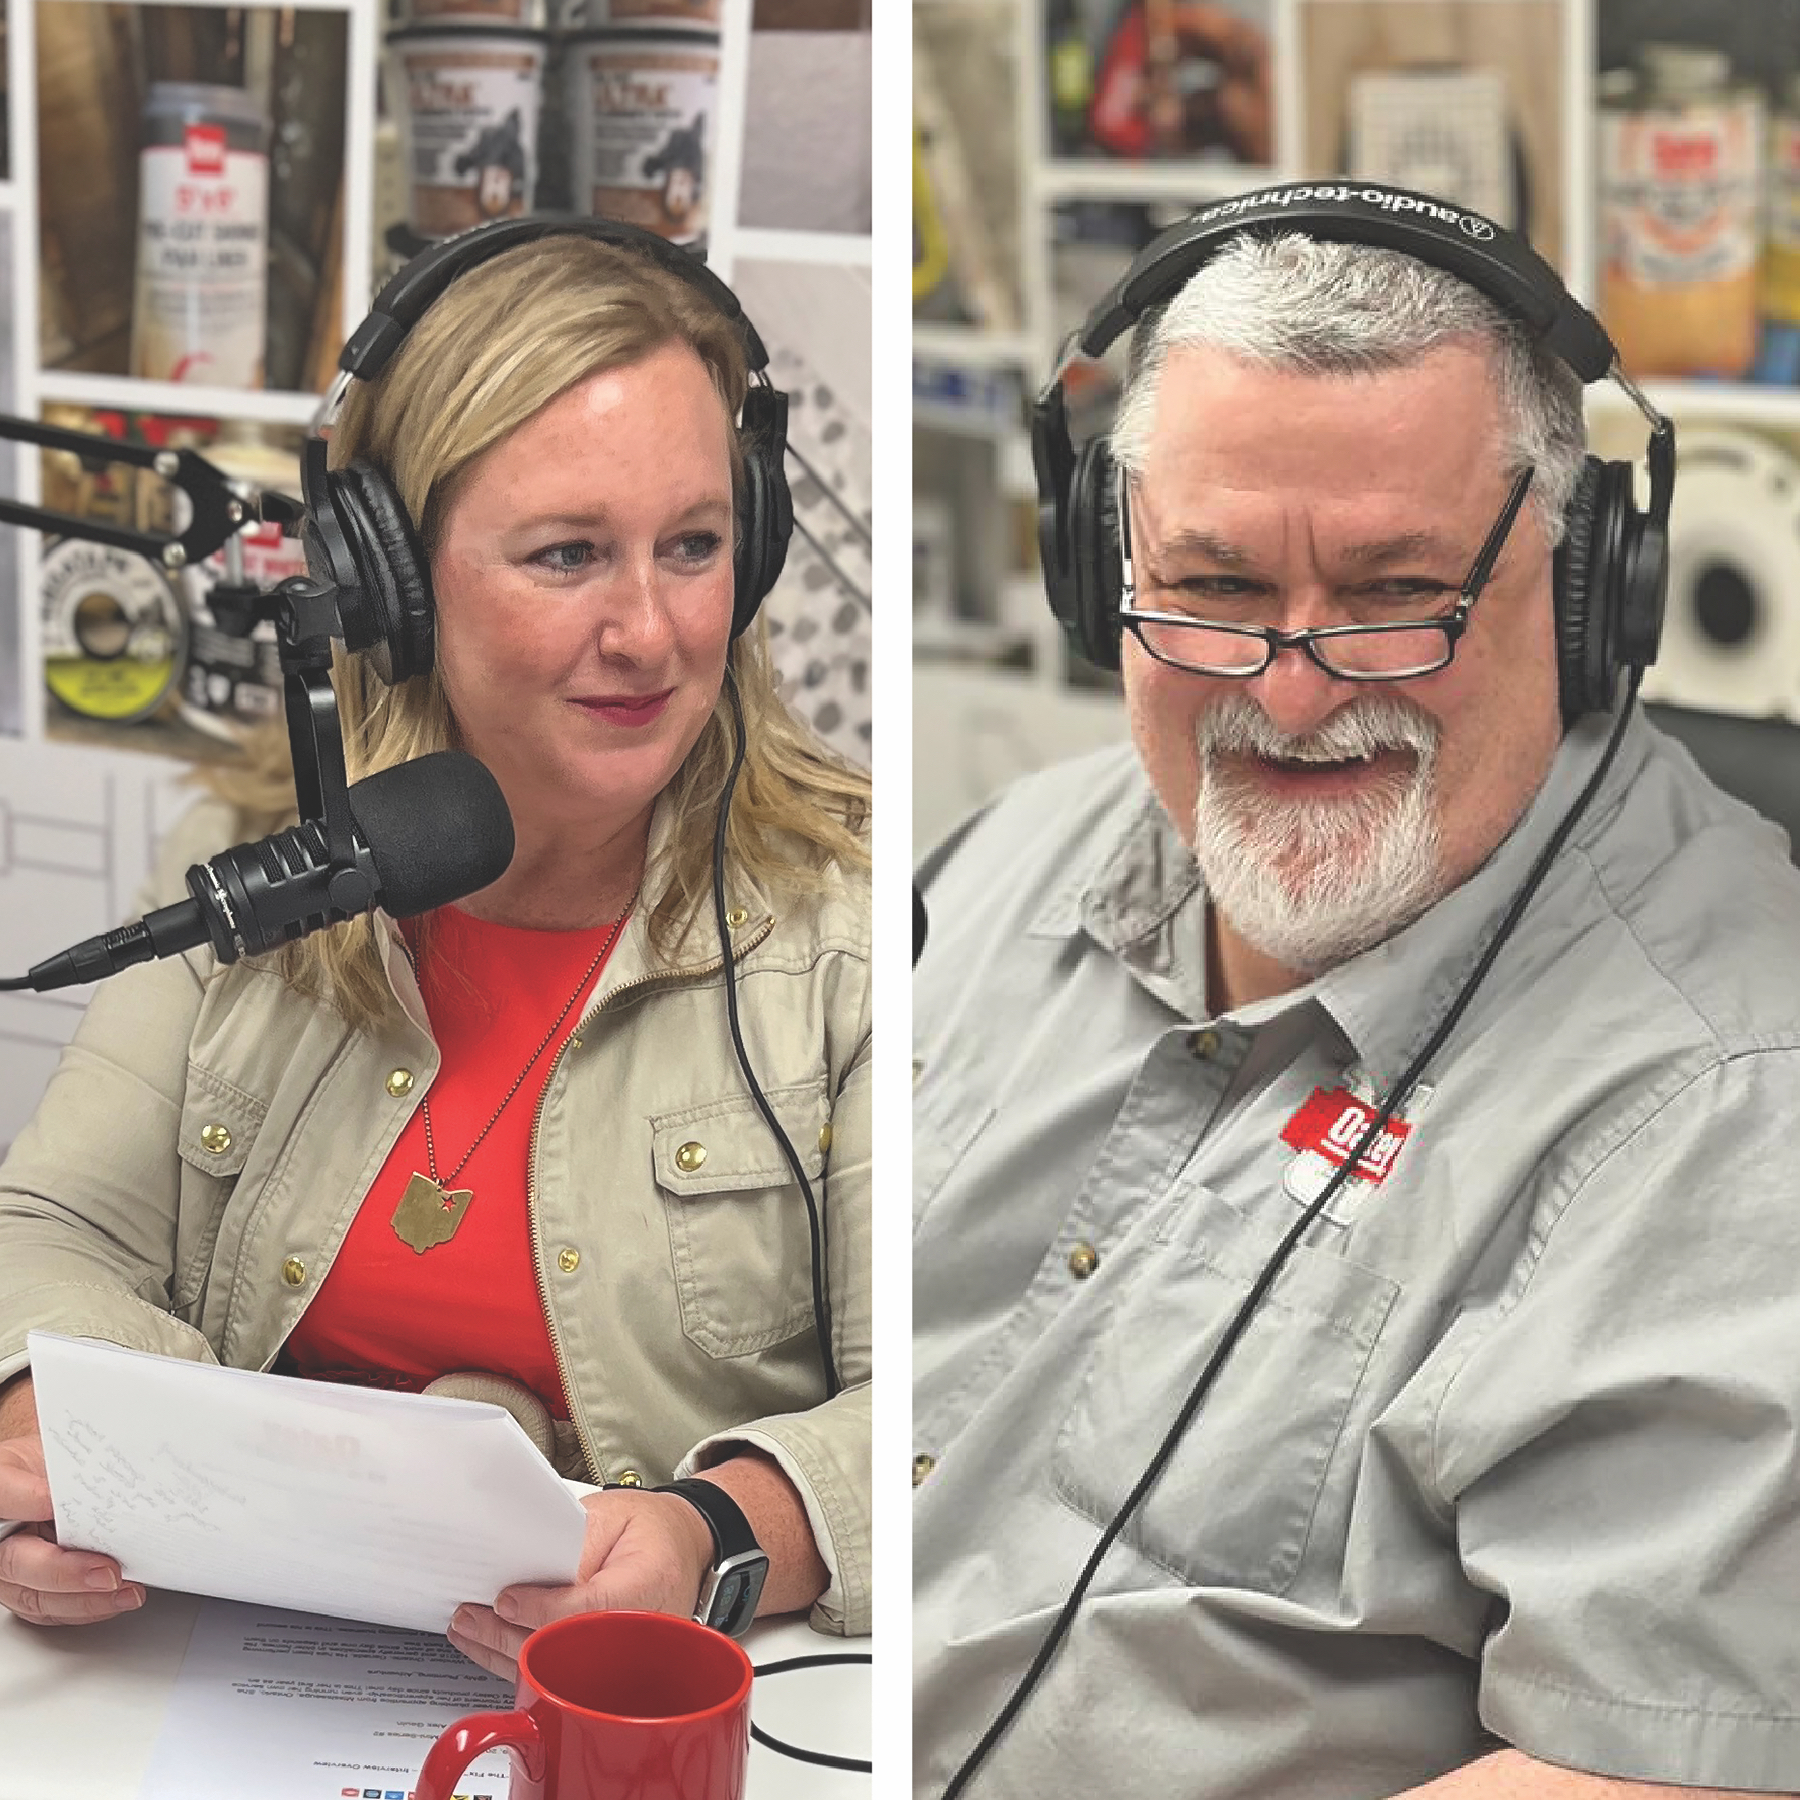 Oatey's Katherine Lehtinen and Doug Buchan host "The Fix" podcast.